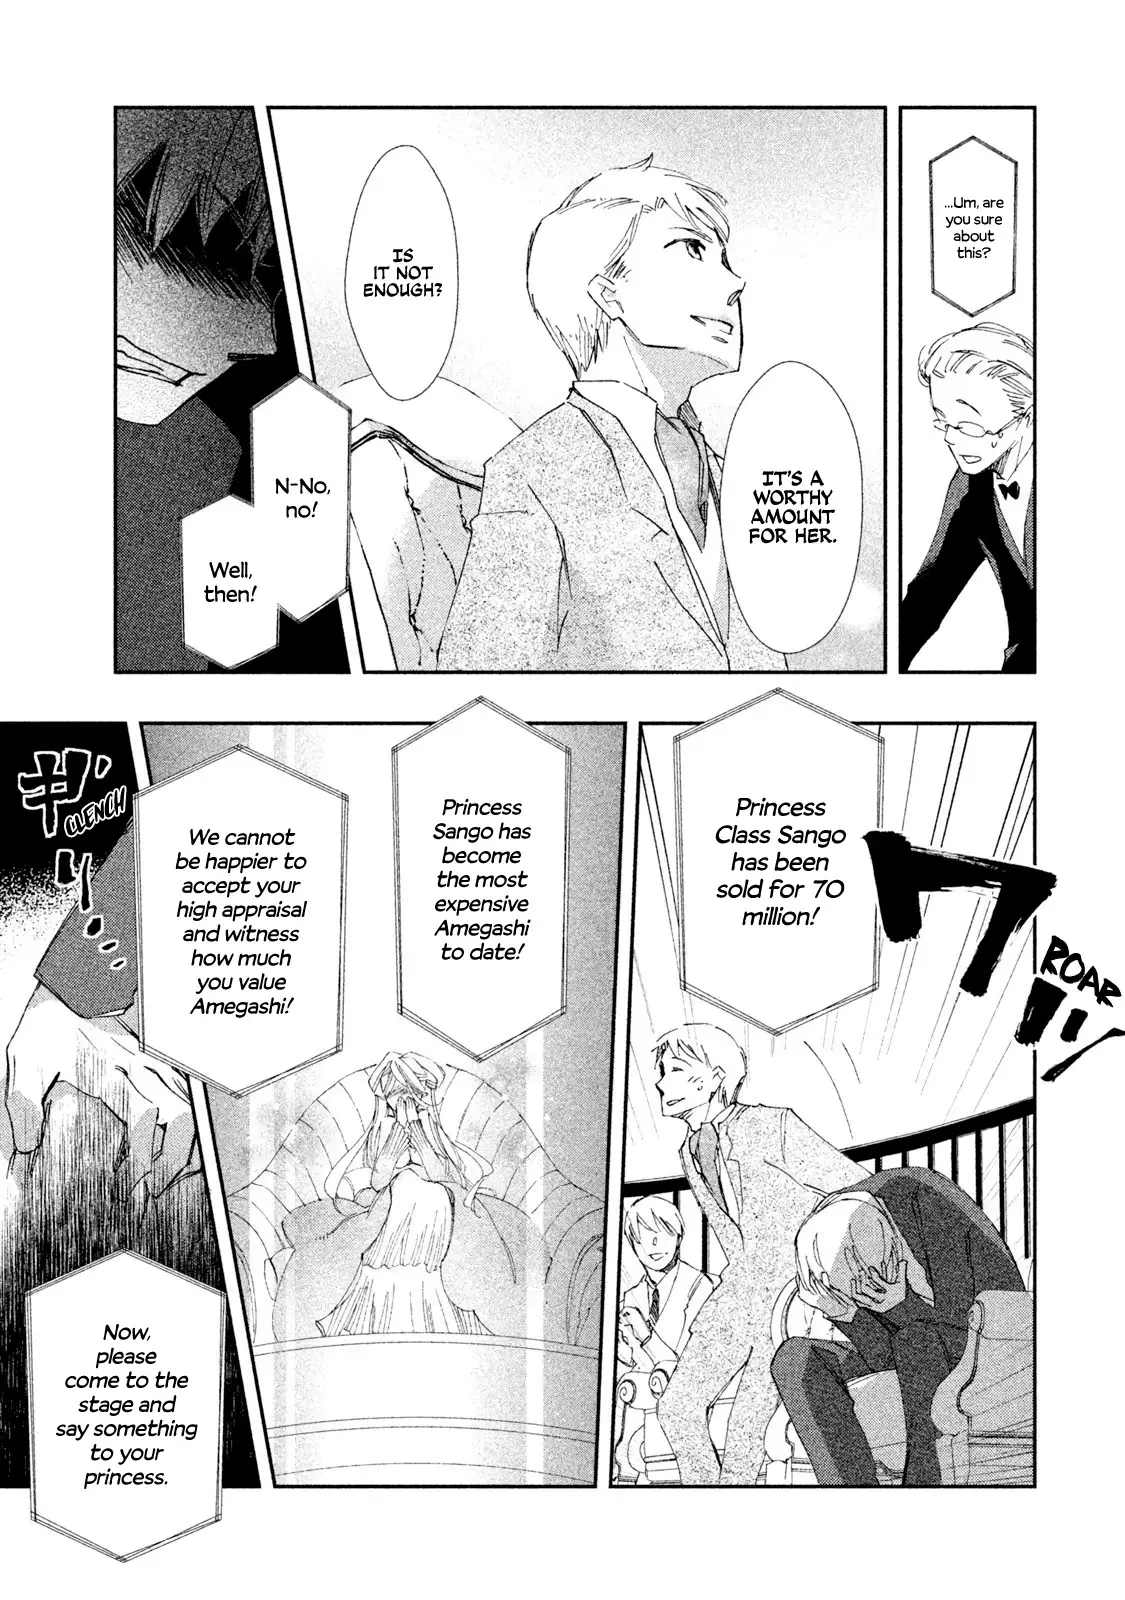 Amegashi - 5 page 28